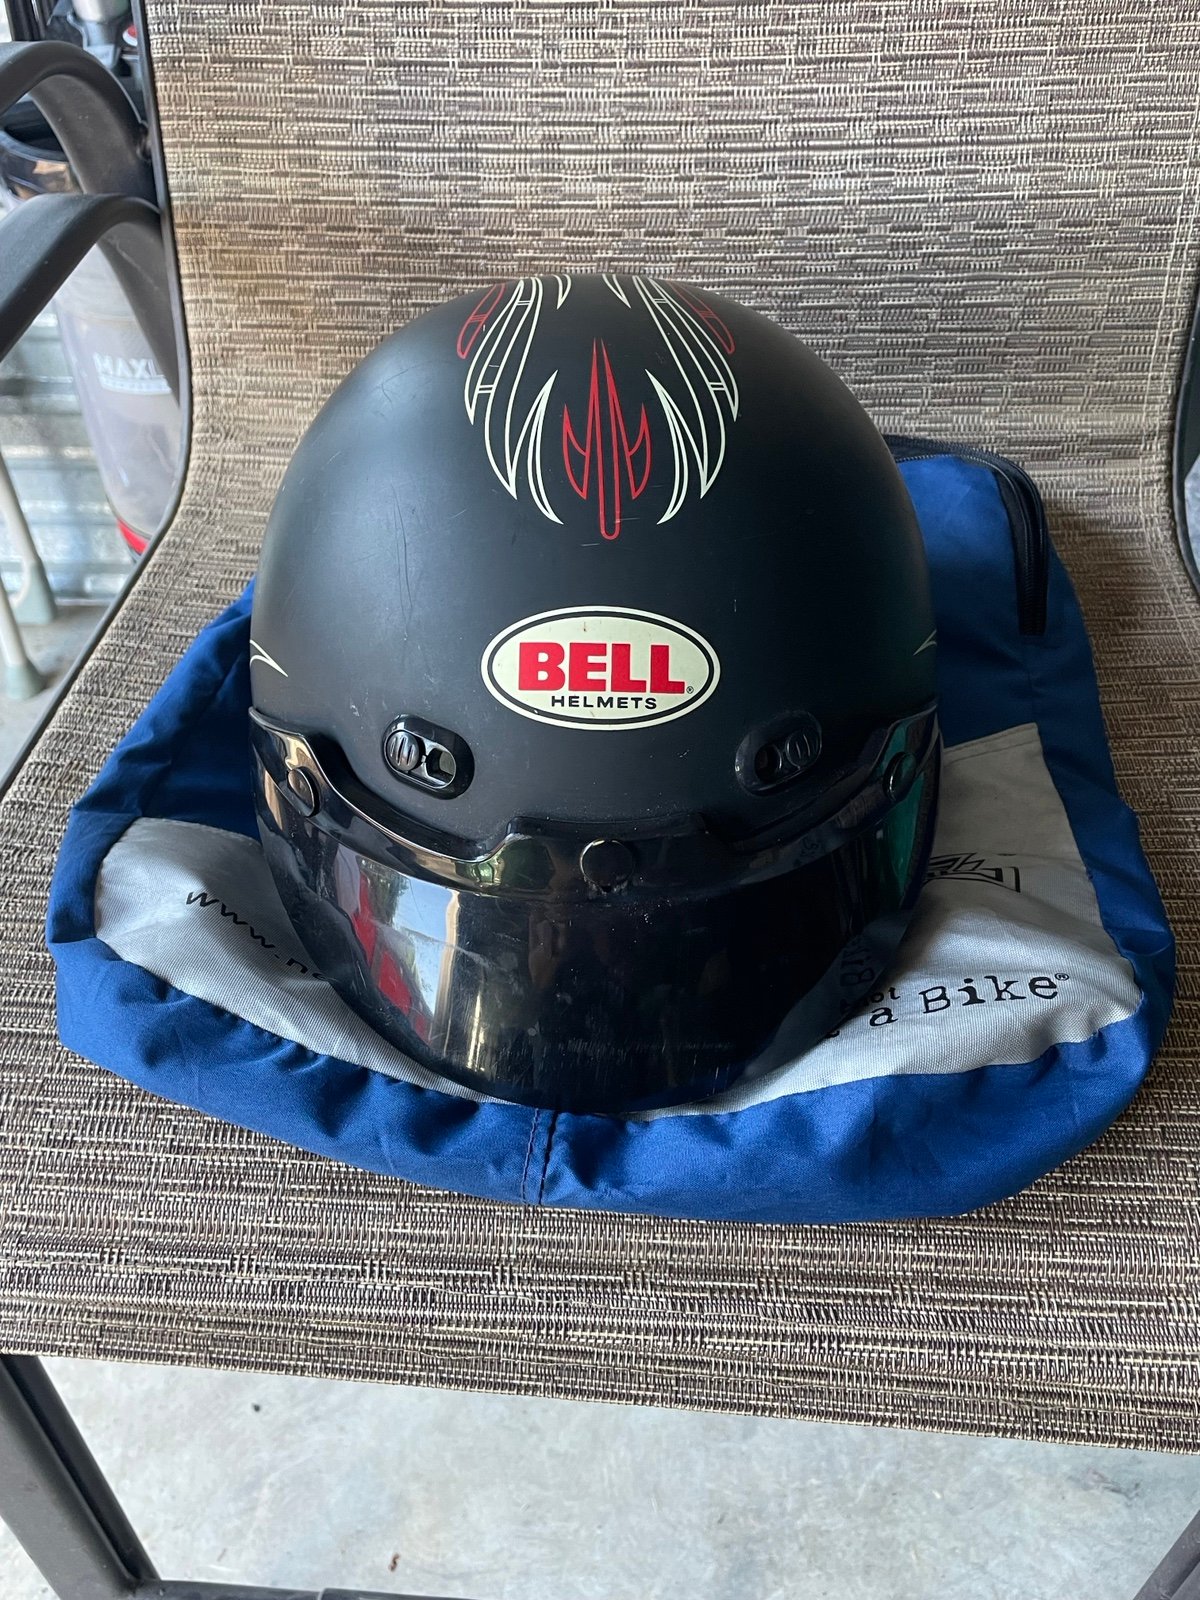 Bell shorty motorcycle helmet 8pL8om960